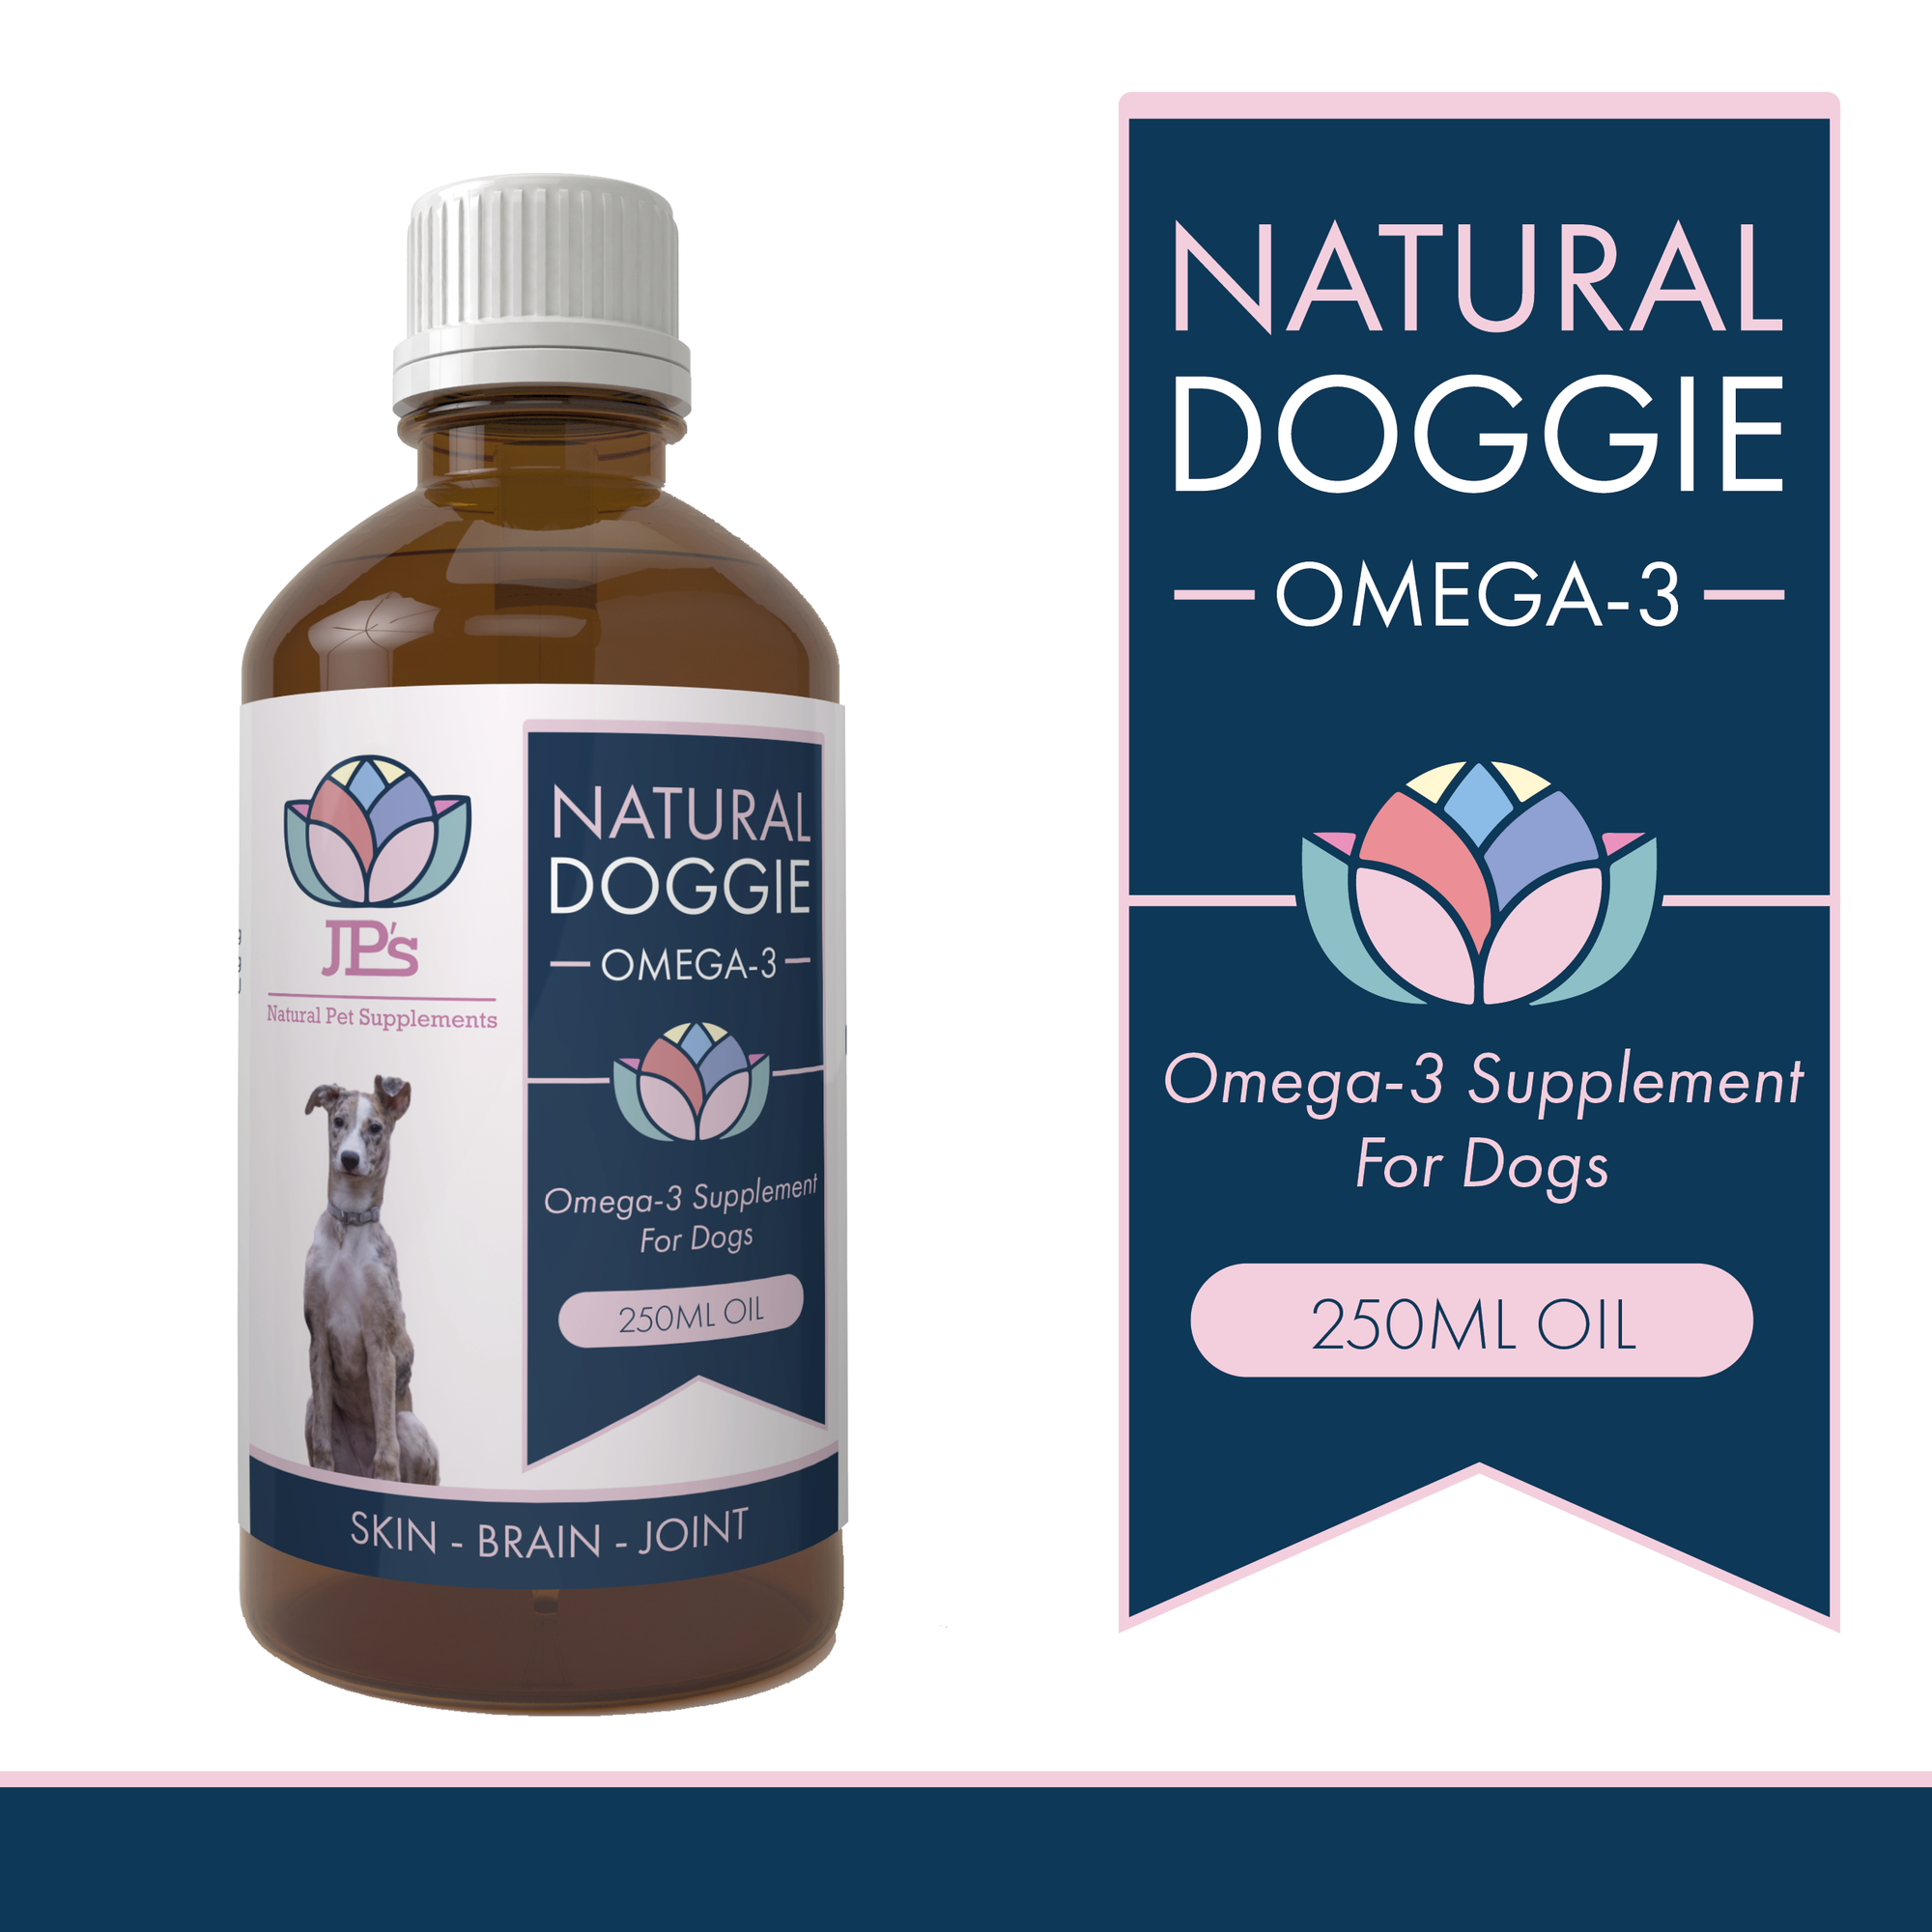 Omega-3 oil supplement for dogs 